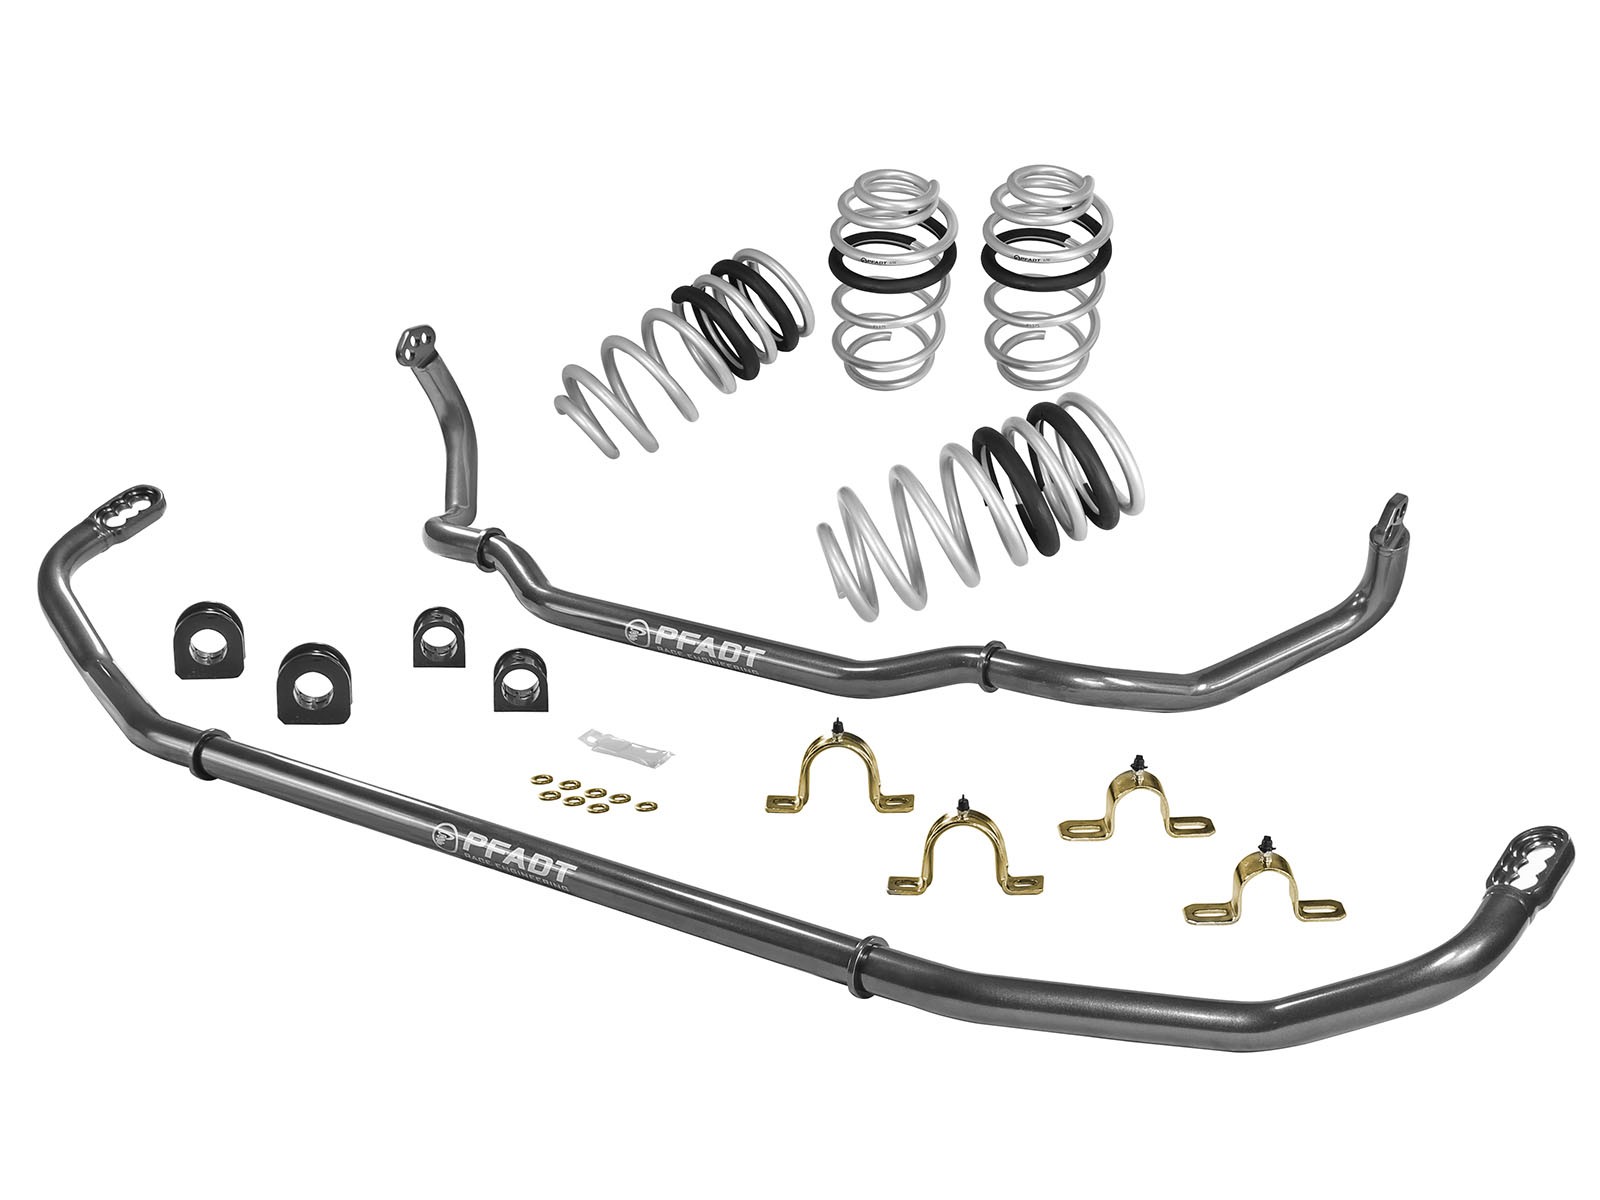 Camaro 2012-2015 V8 aFe Power, aFe Control Series Stage 1, Suspension Sway Bar, Spring Package